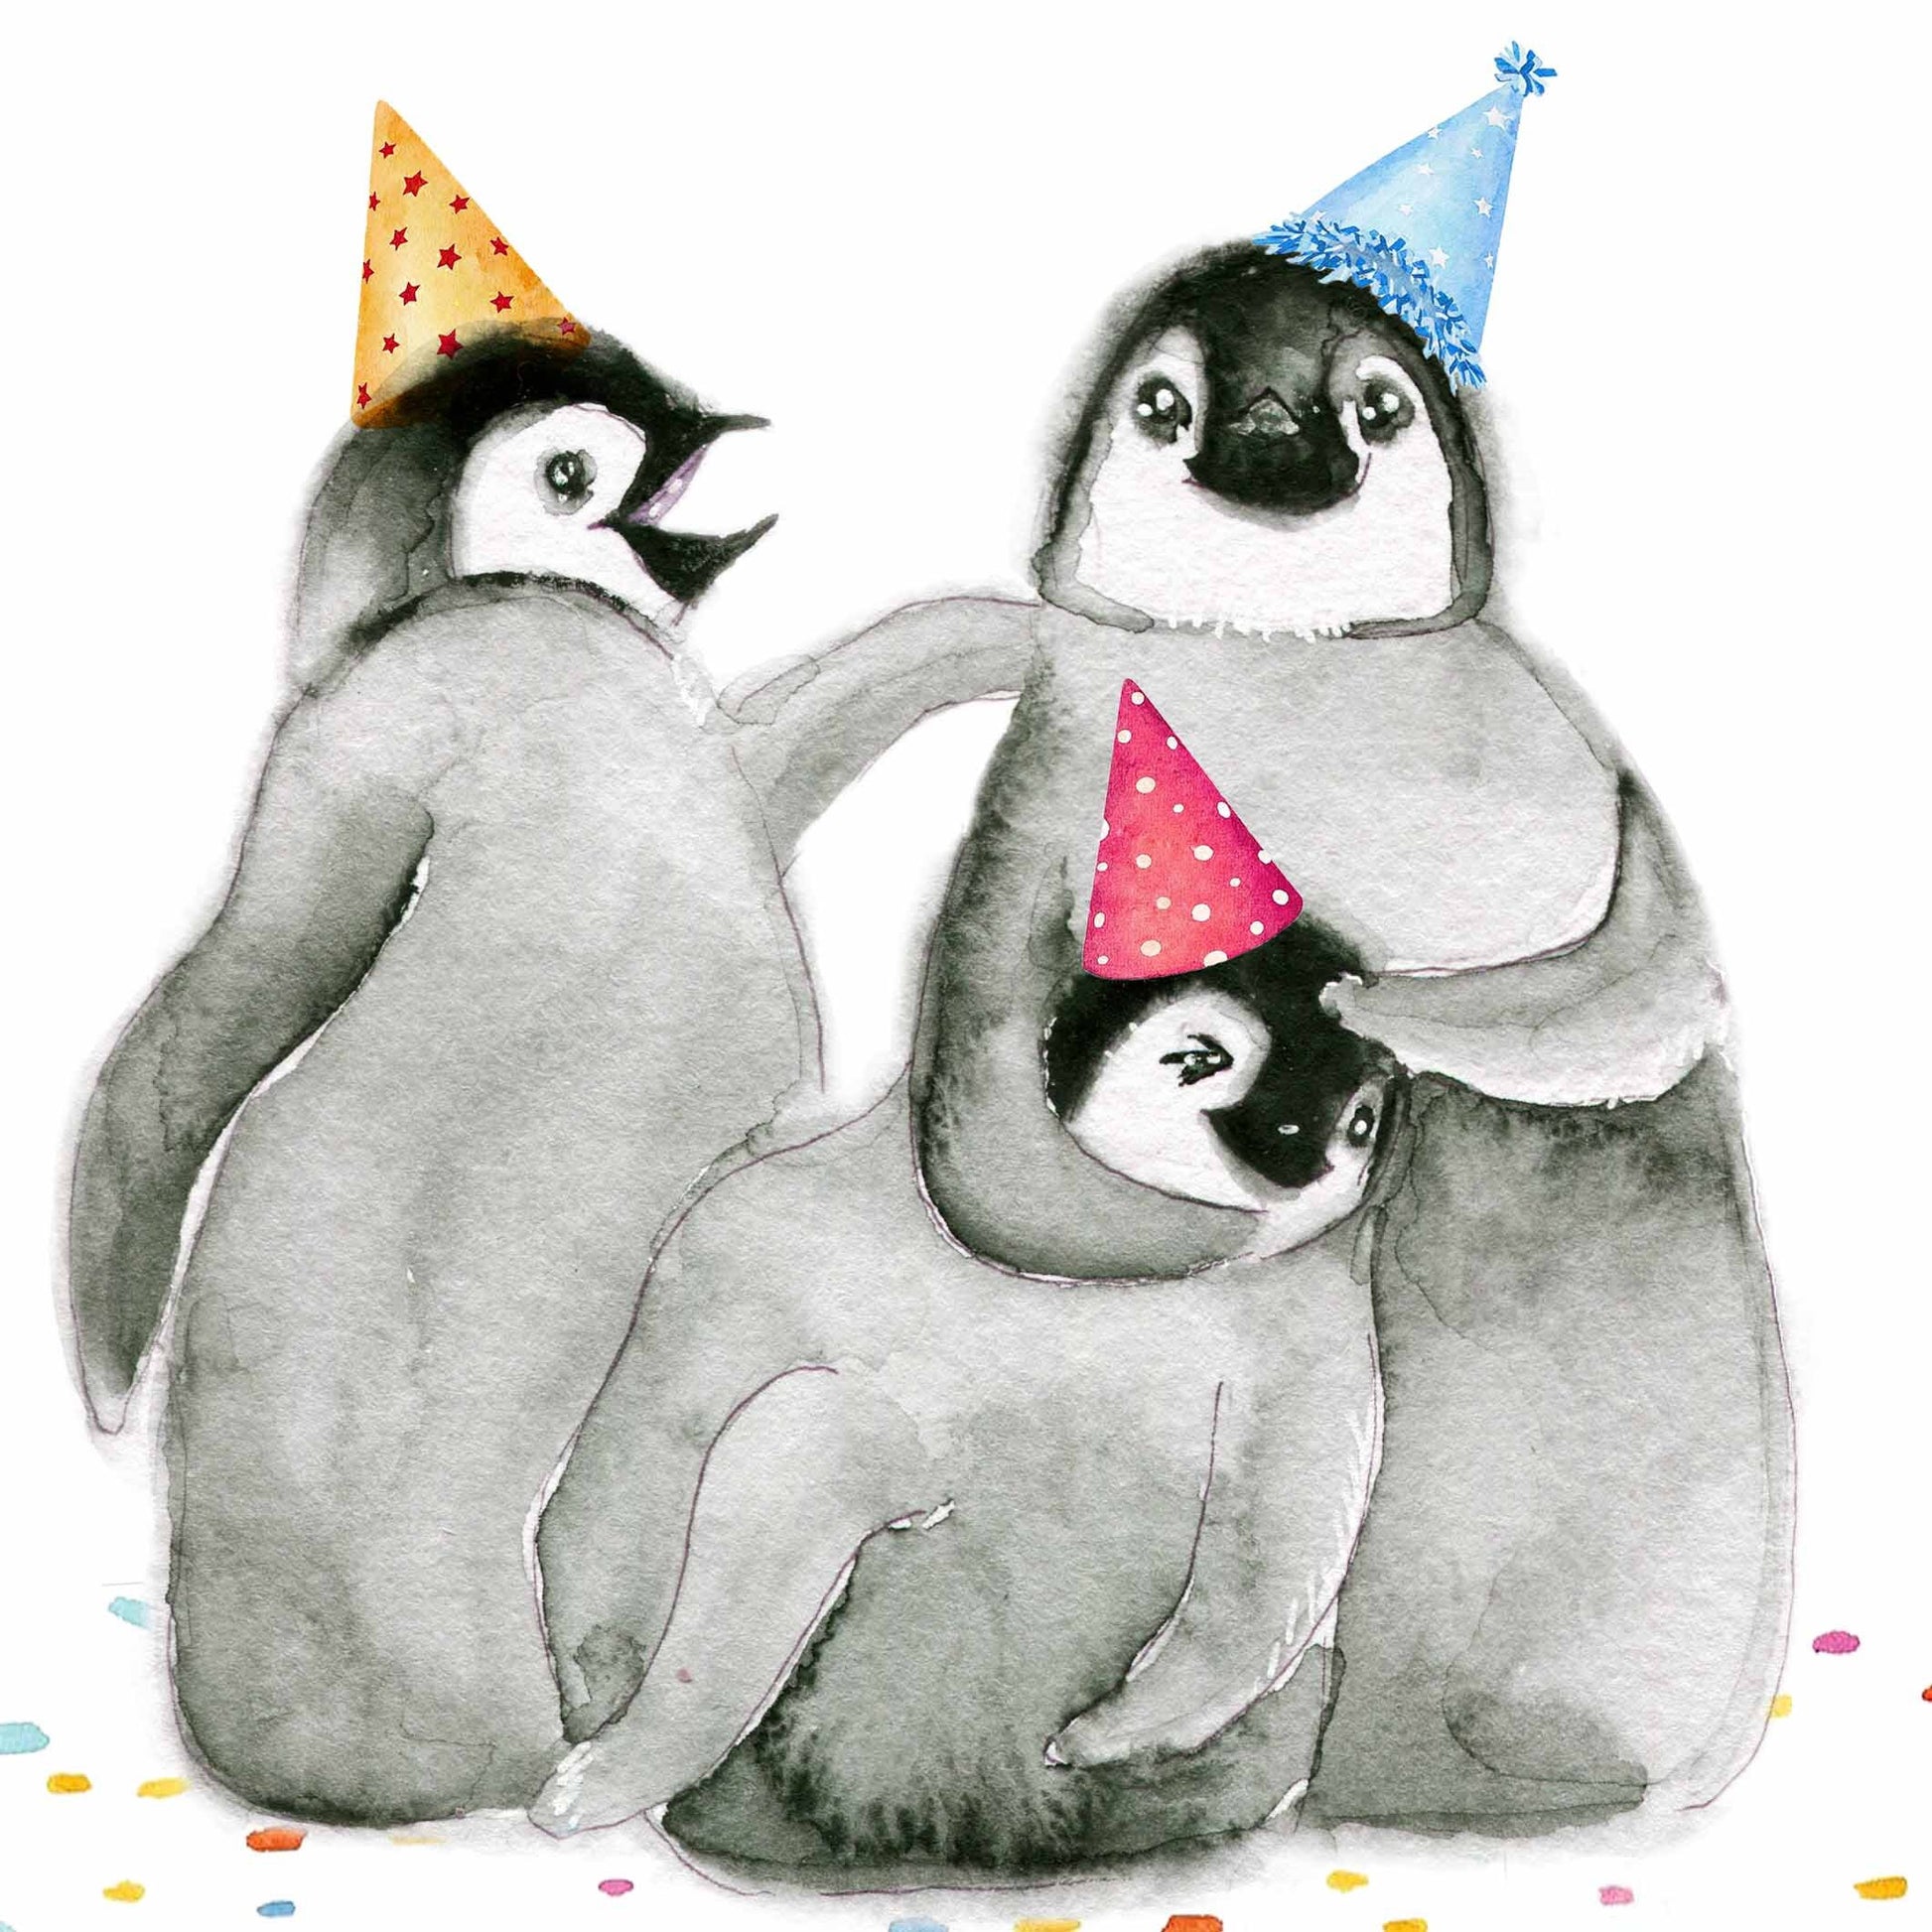 Baby Penguins Cute Birthday Card For Friends - Liyana Studio Greeting Cards Handmade